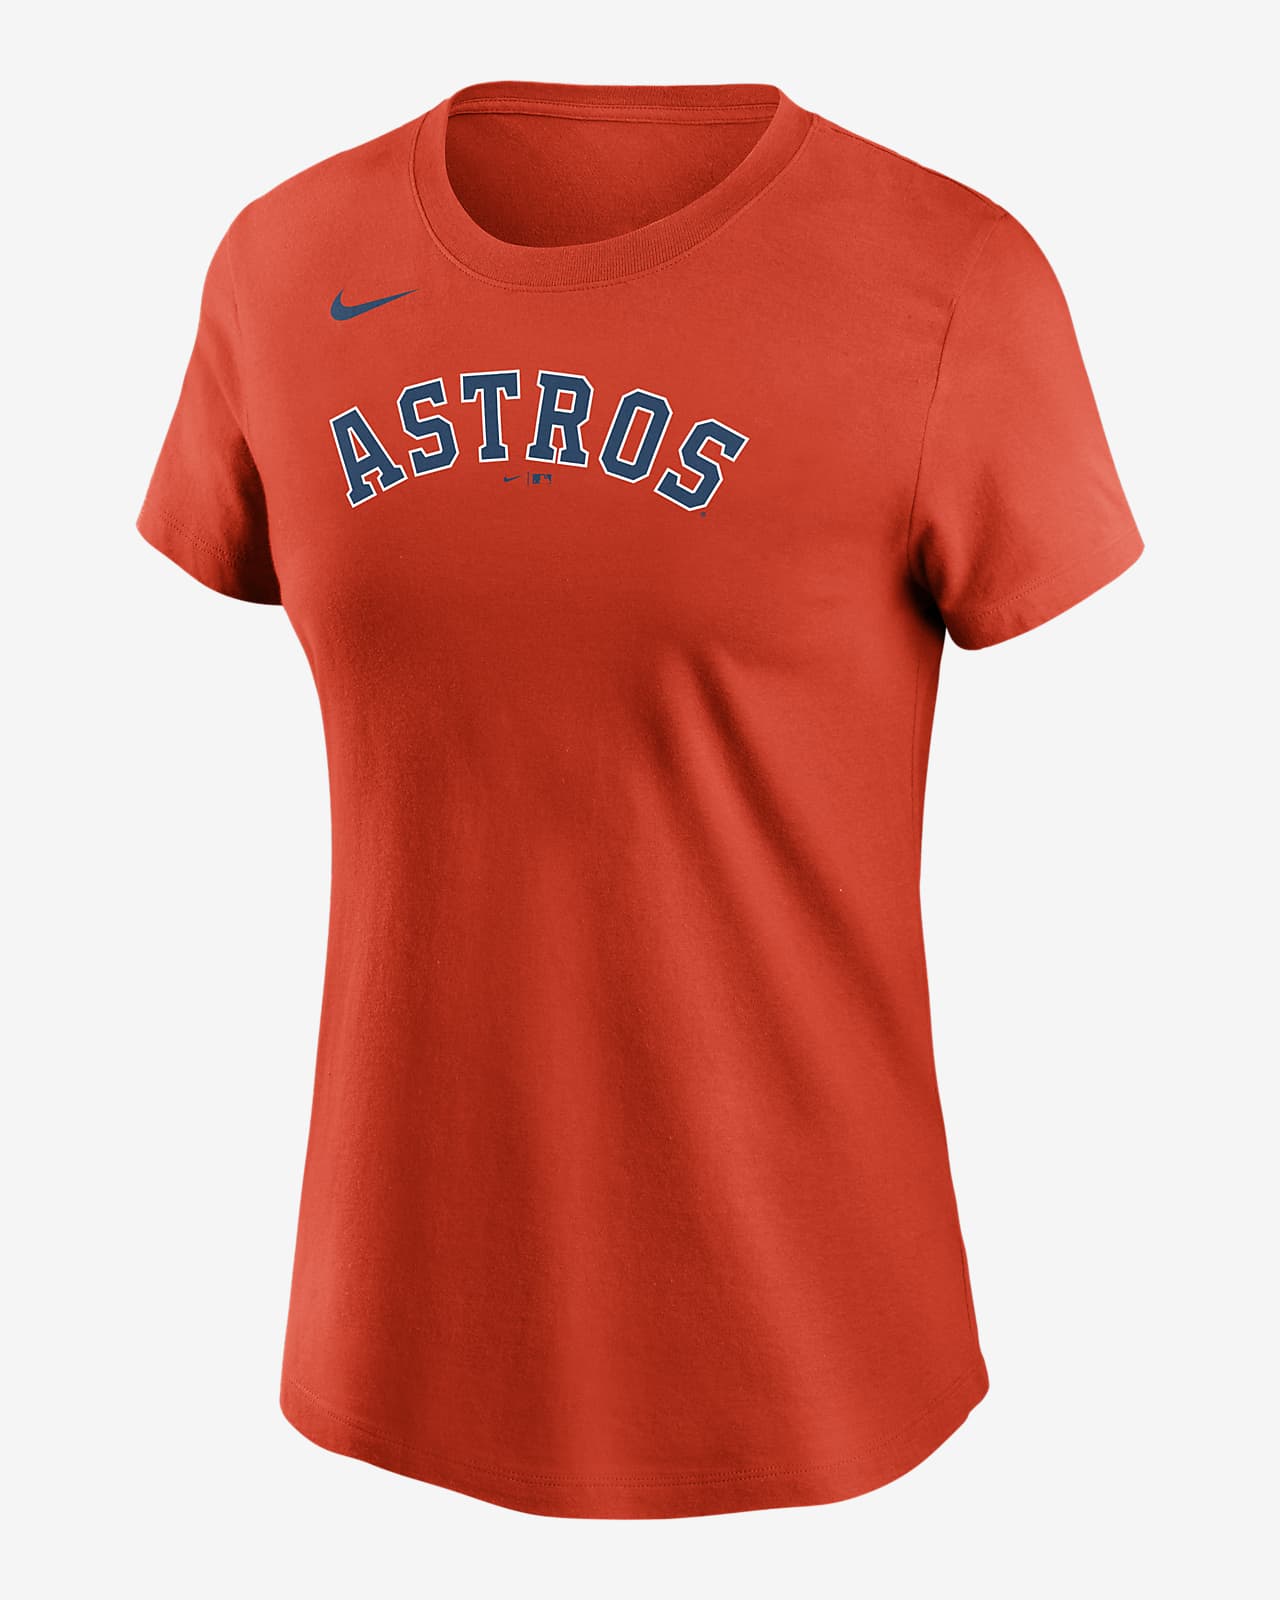 astros womens shirts